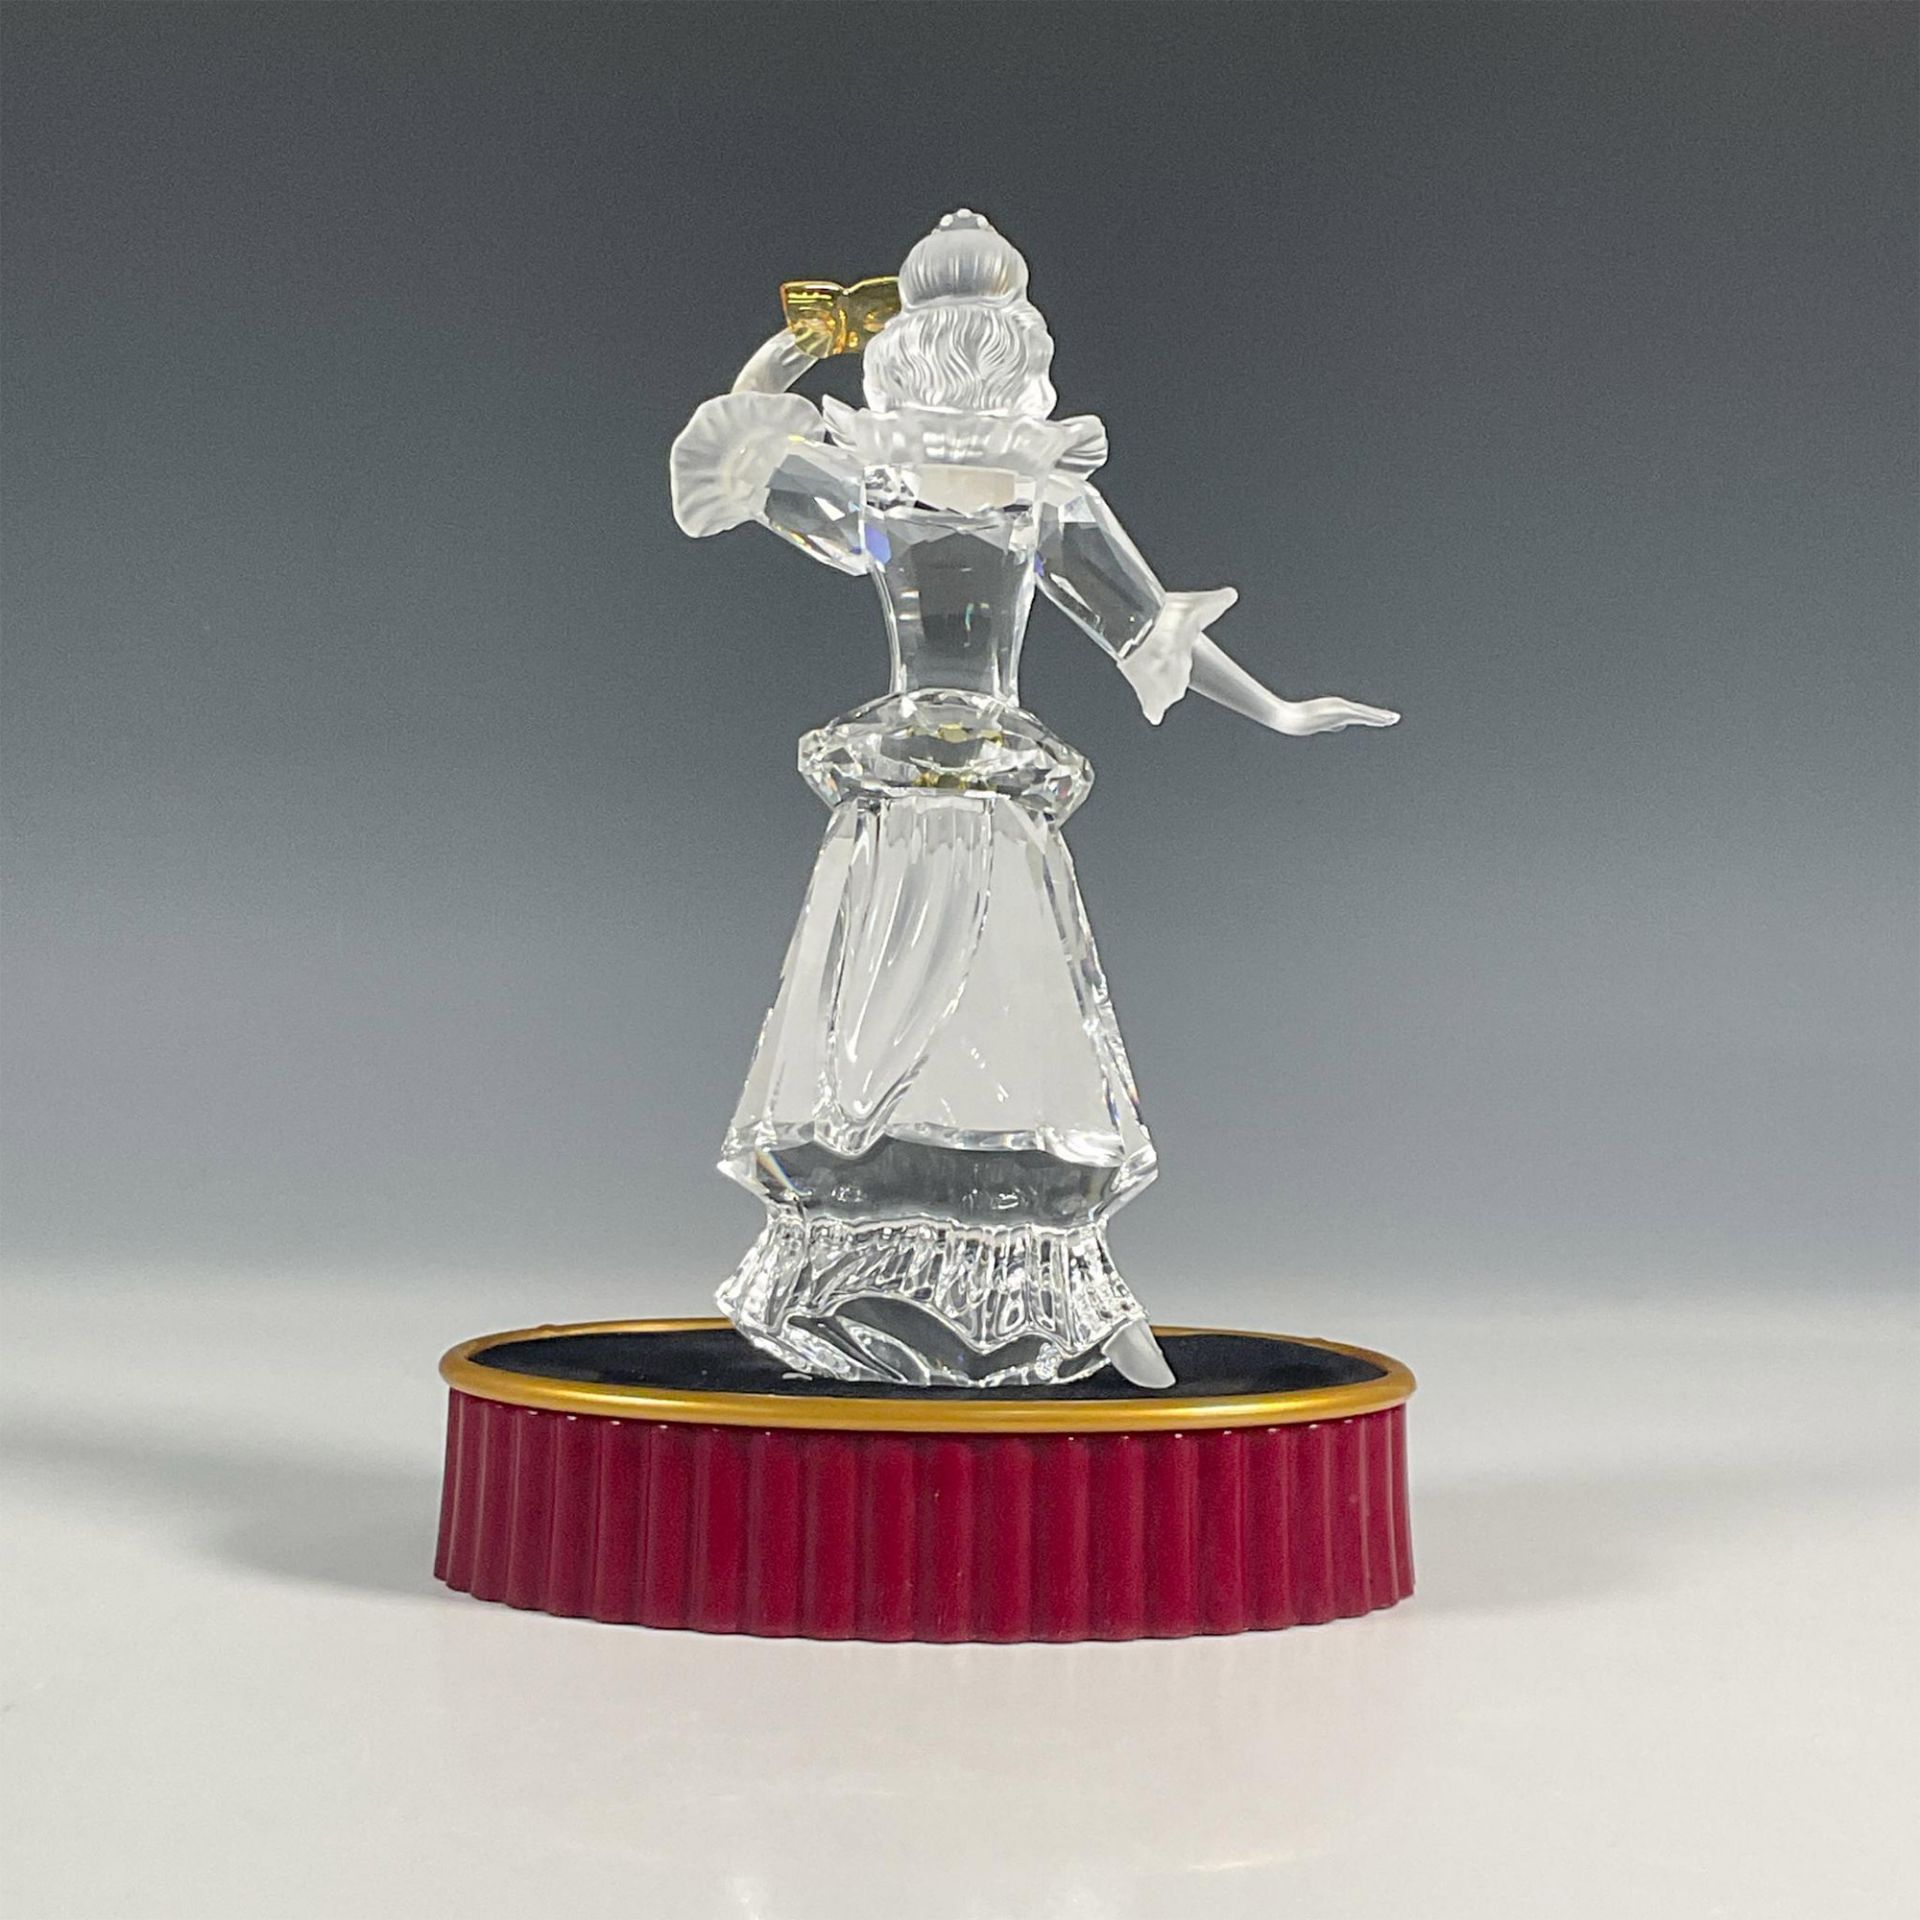 3pc Swarovski Crystal Figurine and Accessories, Columbine - Image 4 of 5